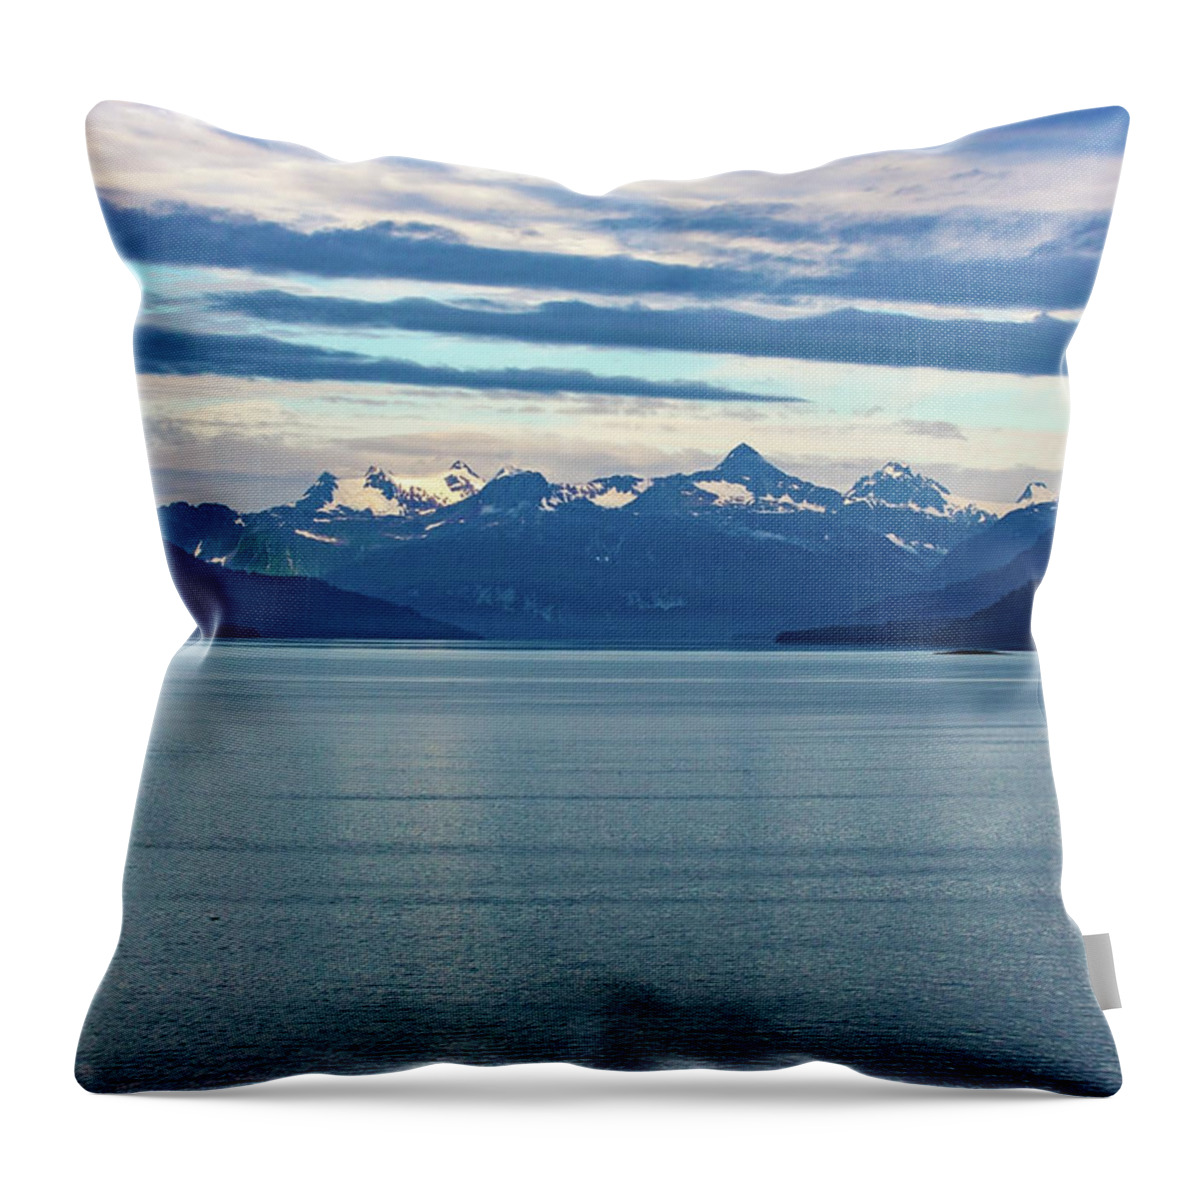 Alaska Throw Pillow featuring the photograph Alaskan Landscape by Anthony Jones